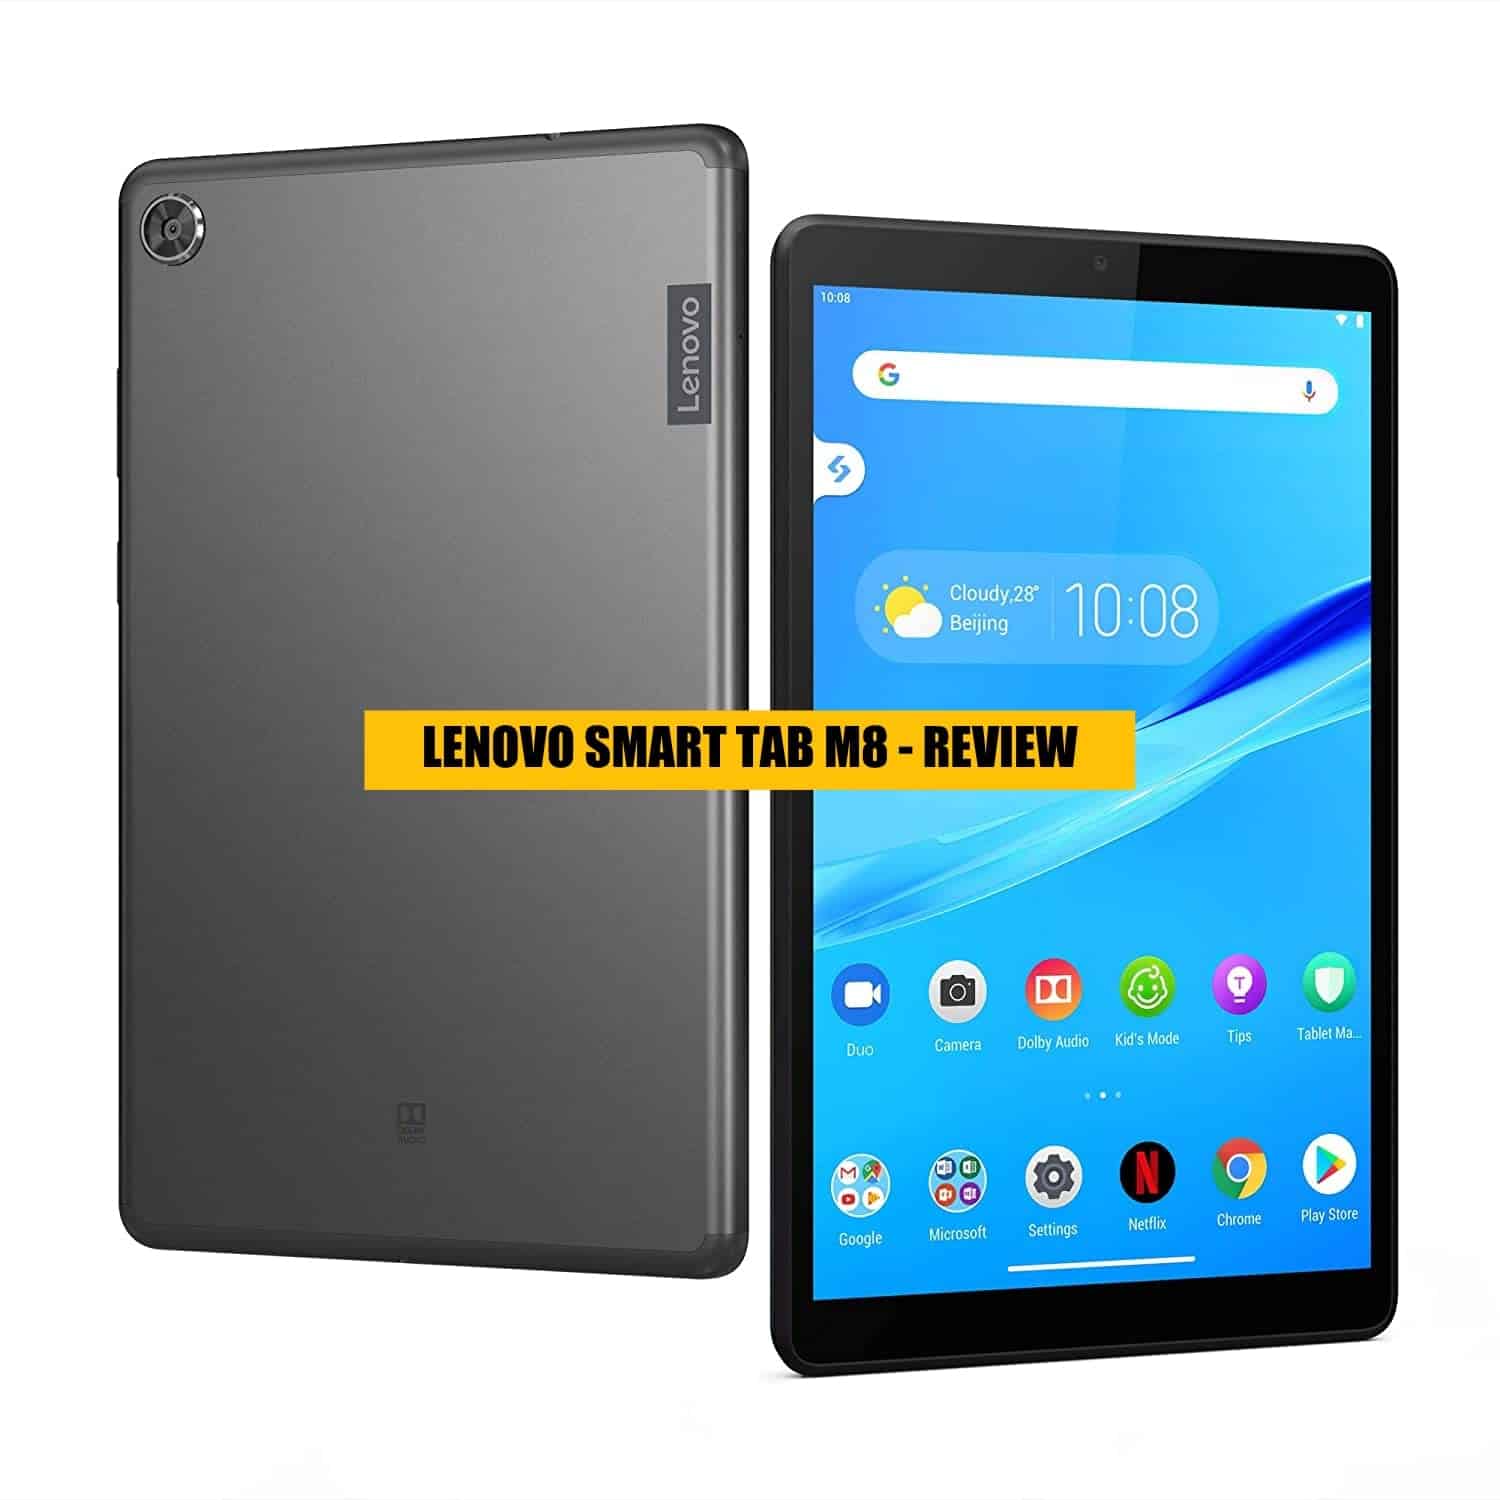 Lenovo Smart Tab M8 Review - Pros & Cons 